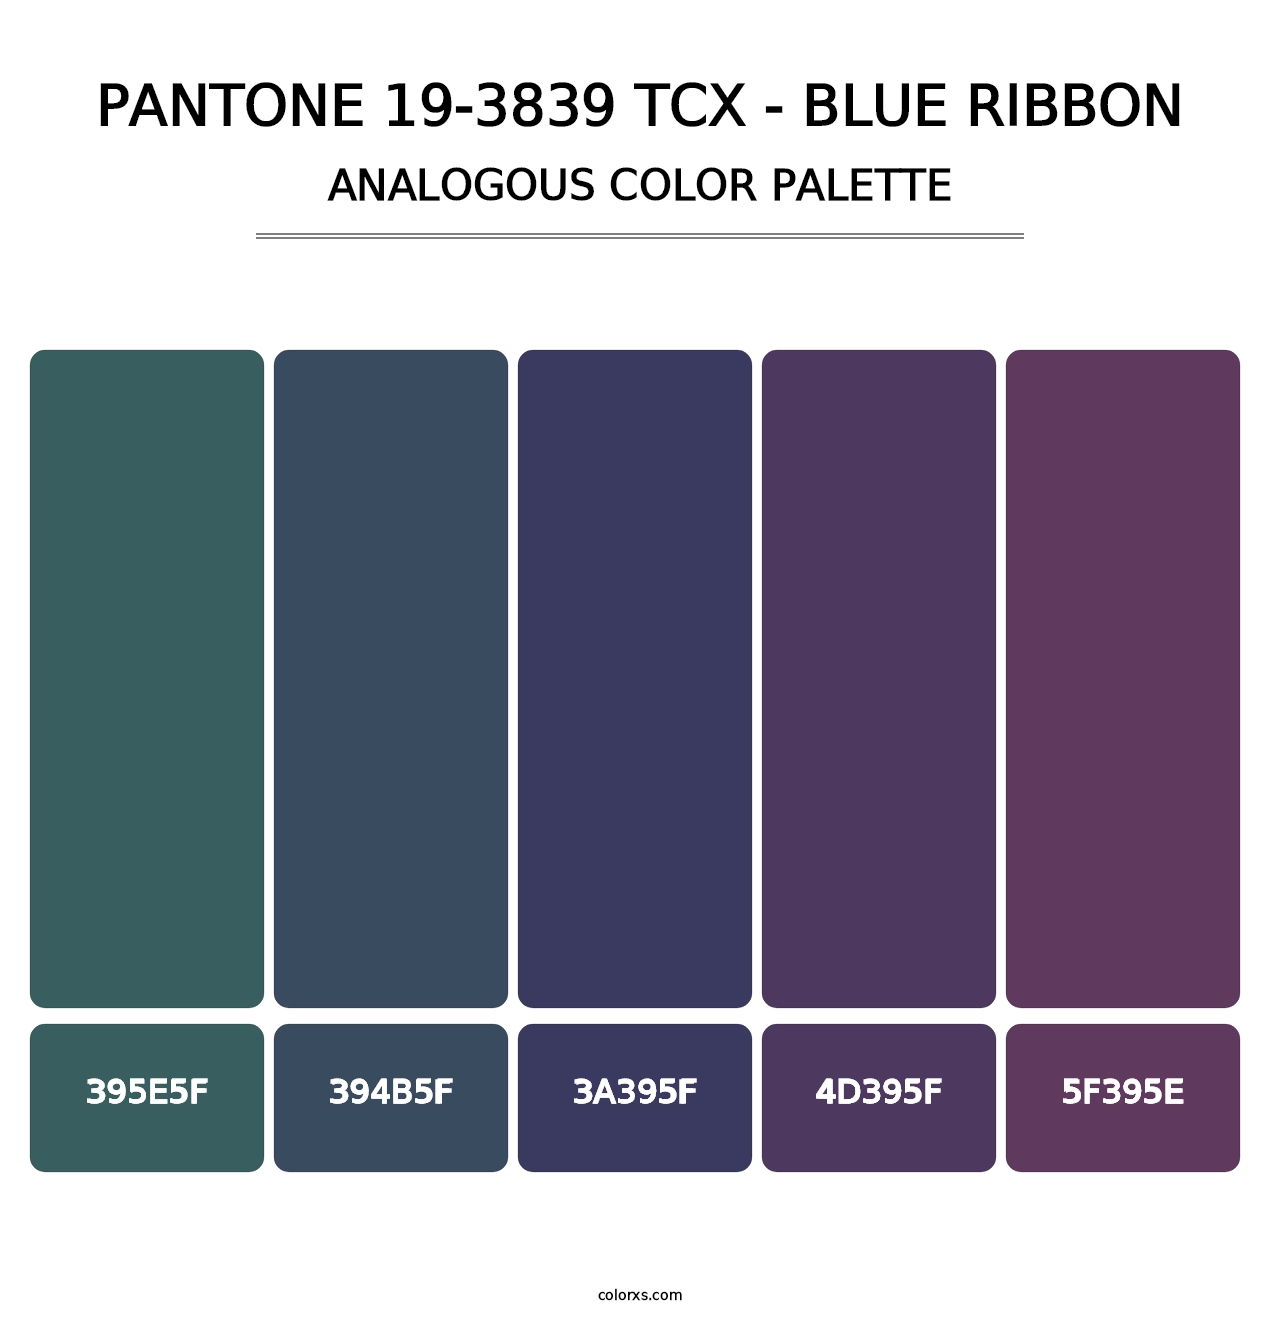 PANTONE 19-3839 TCX - Blue Ribbon - Analogous Color Palette